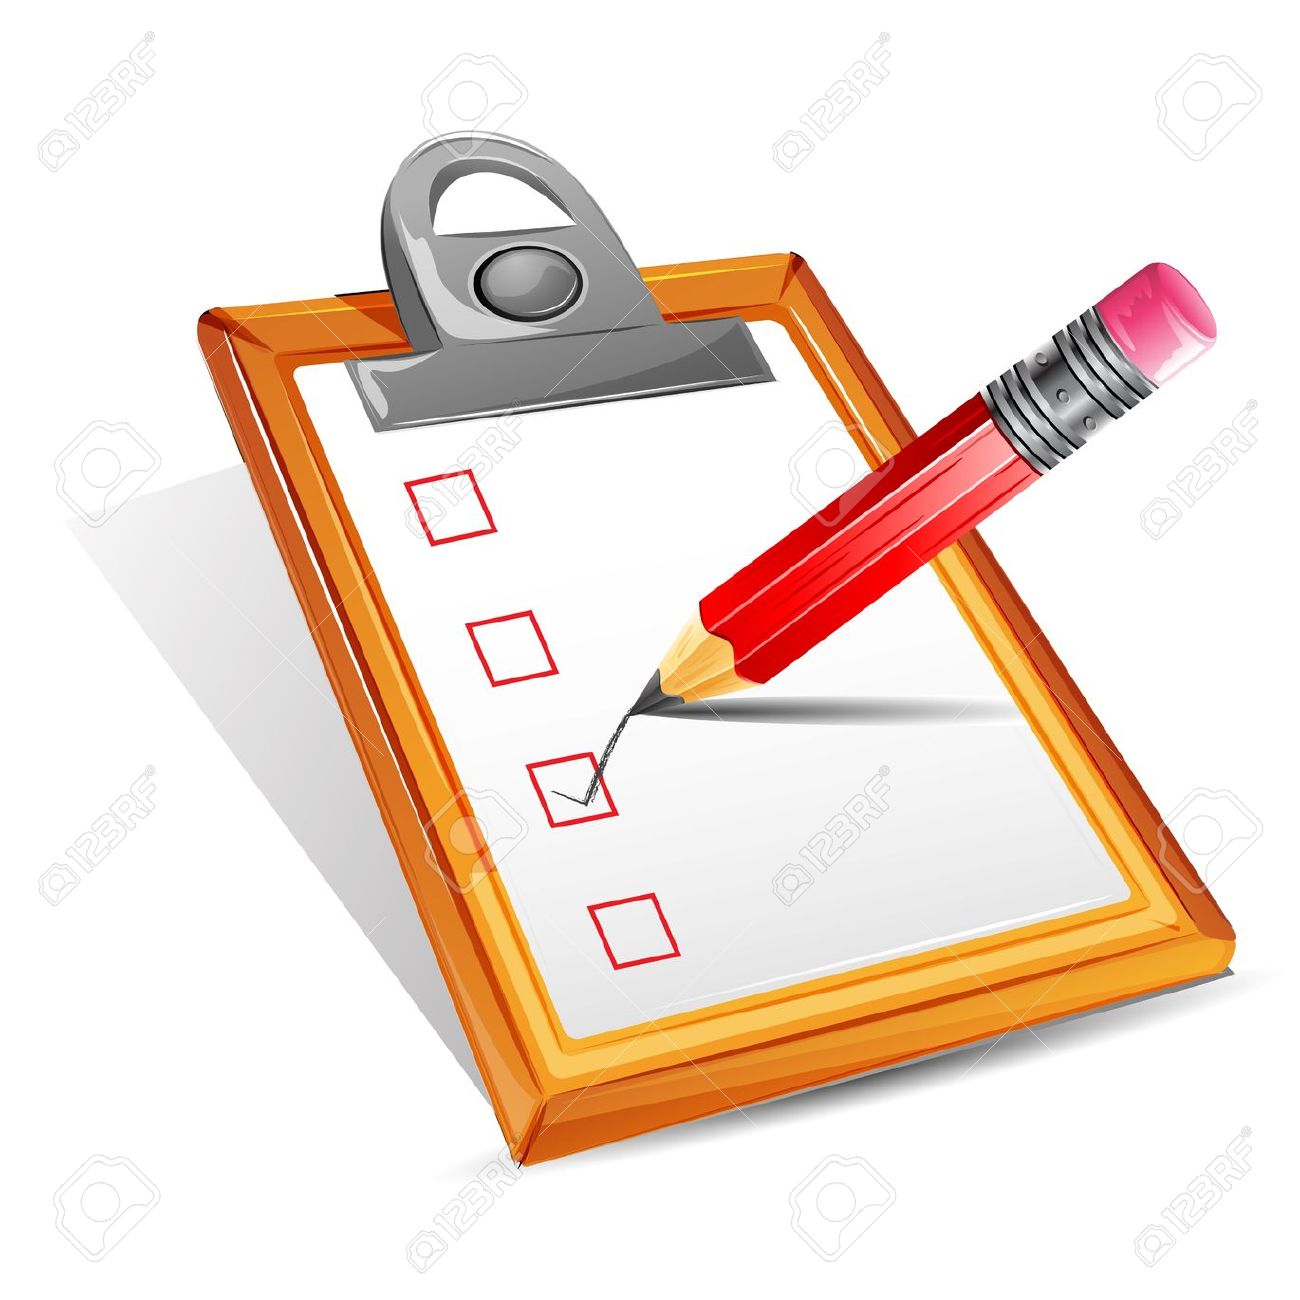 checklist clipart clipboard